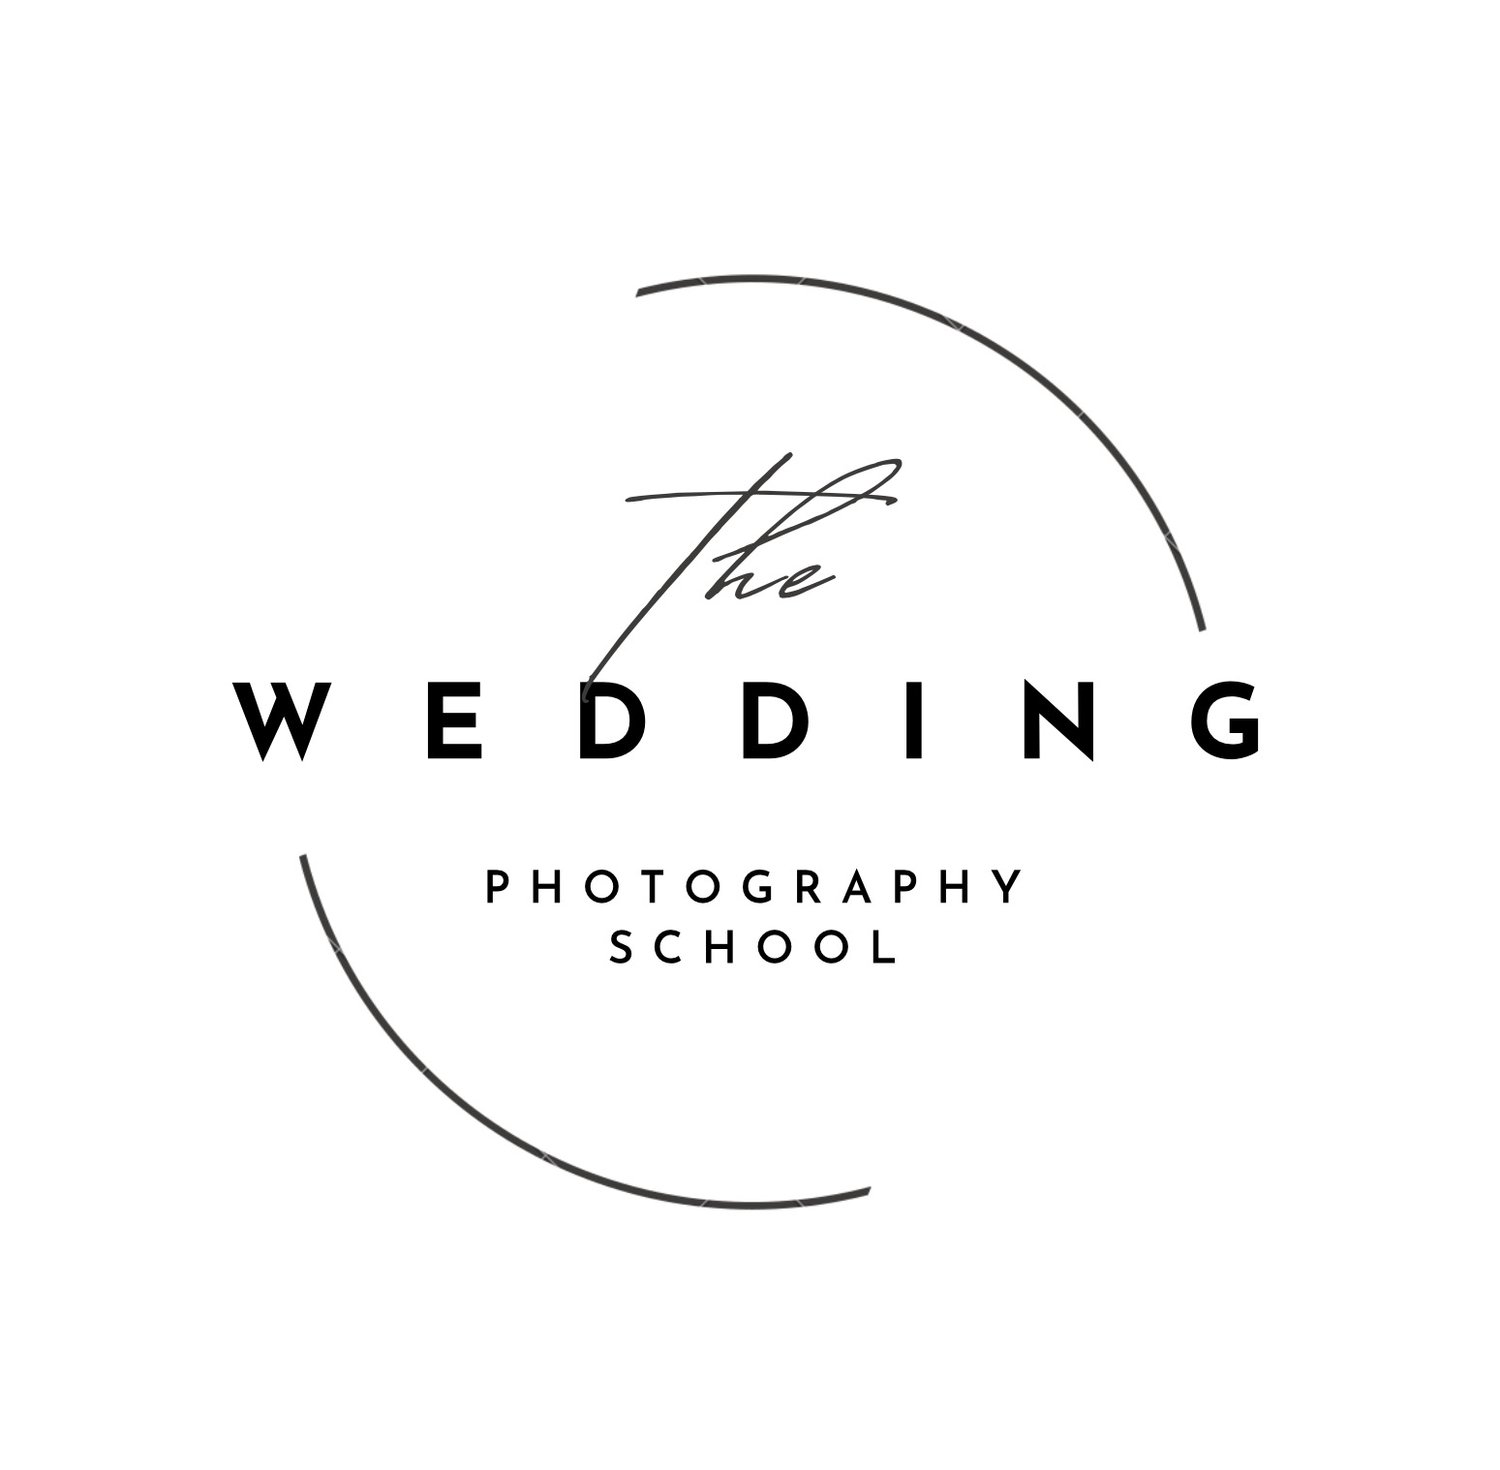 The Wedding Photography School